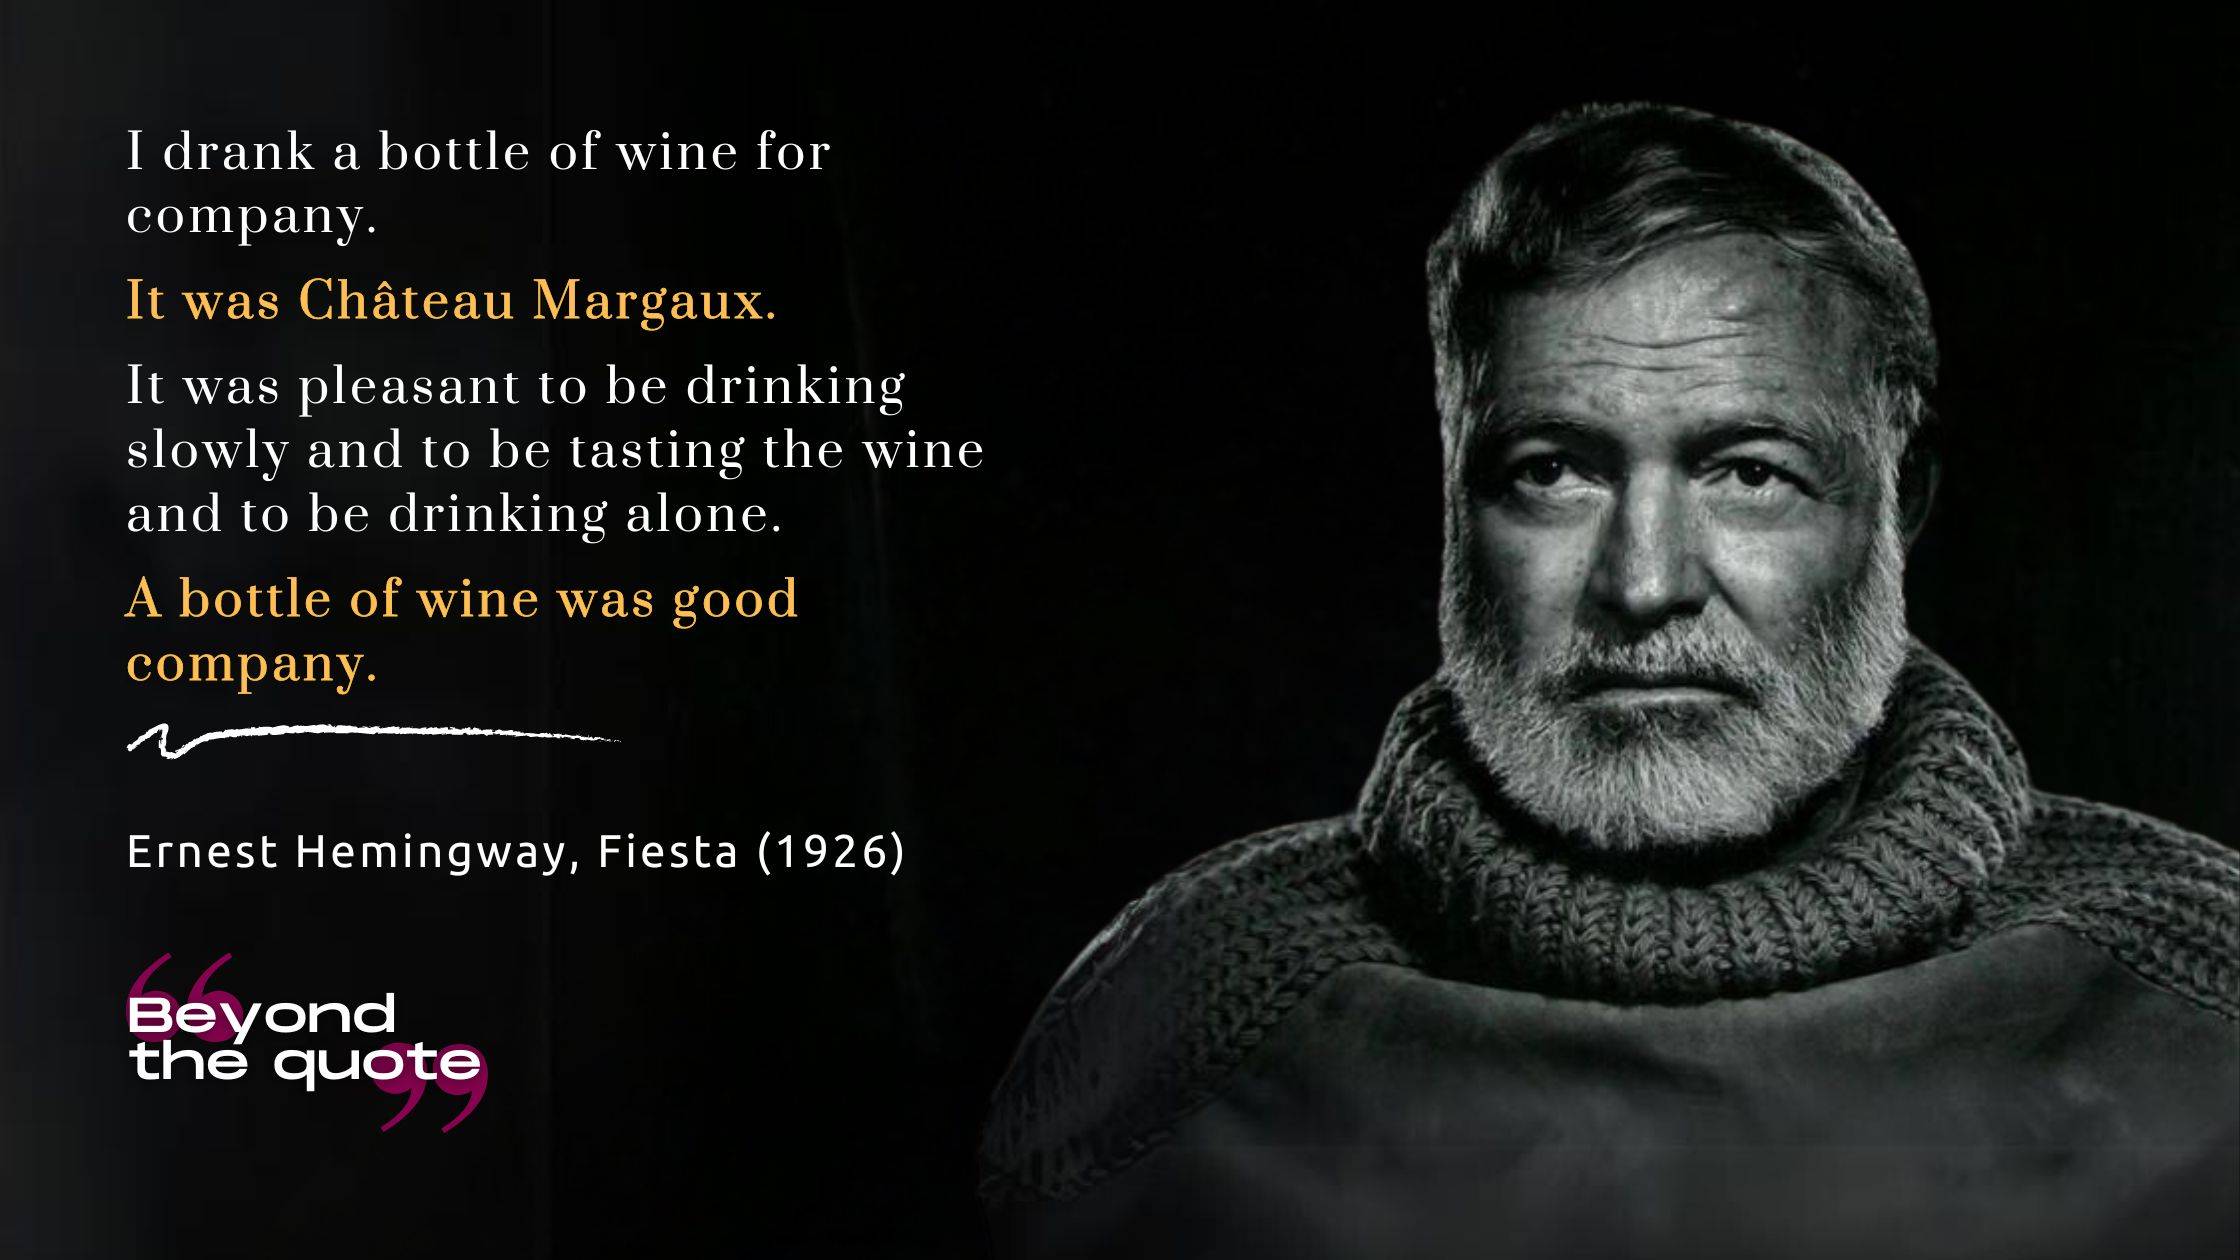 Ernest Hemingway - quote